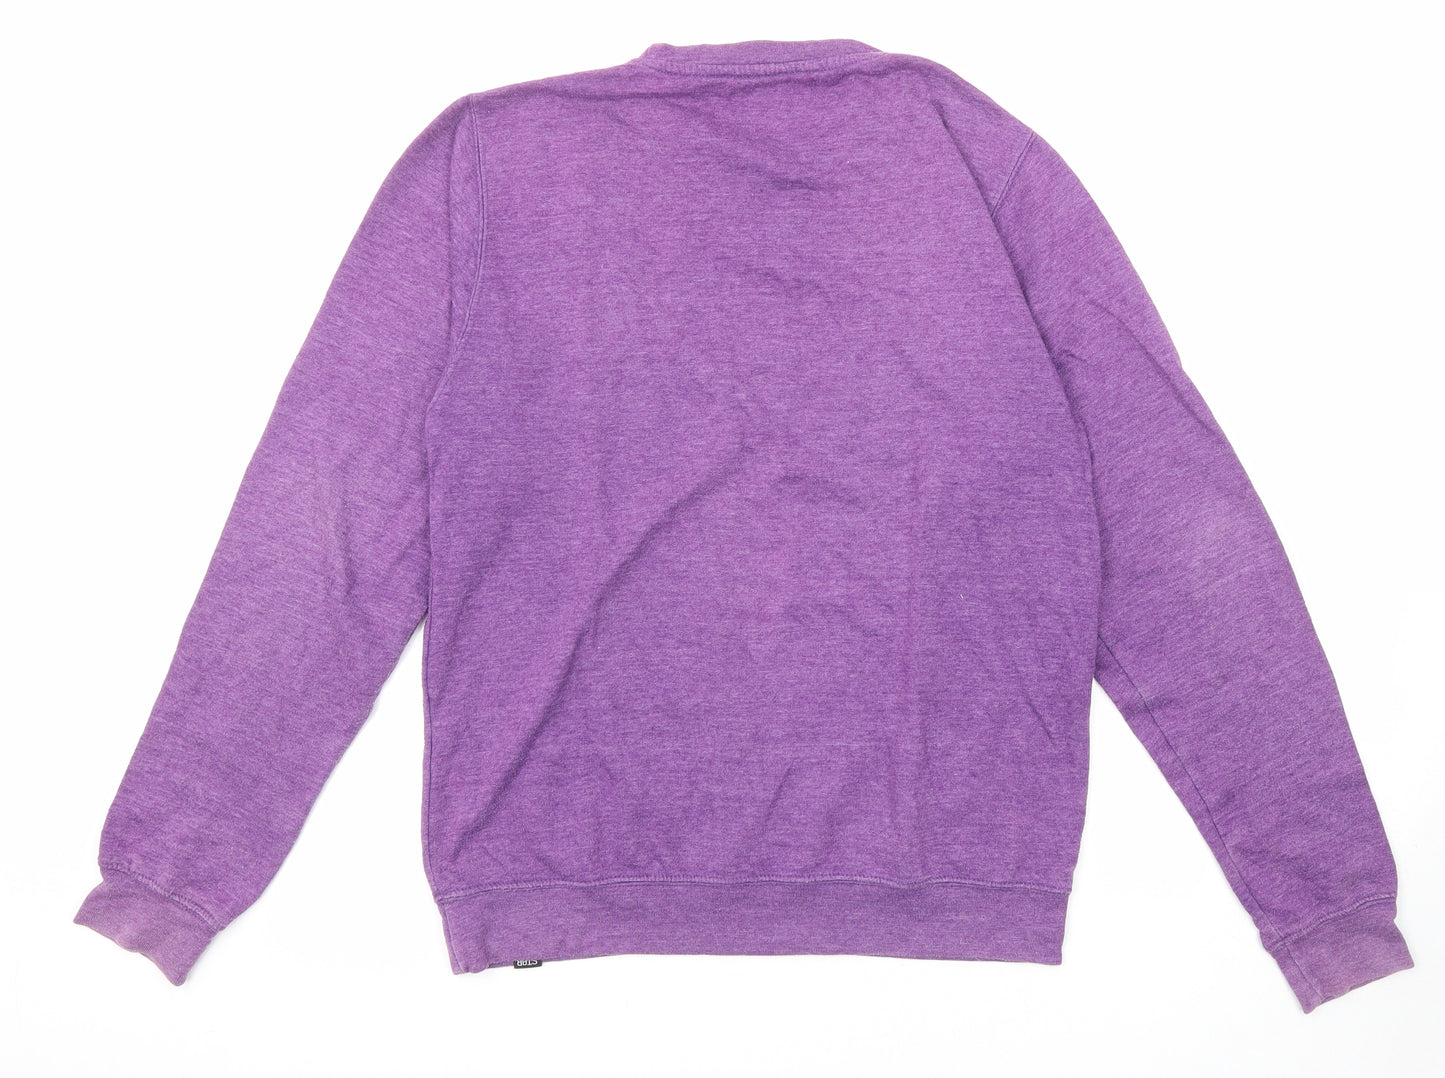 Star Surf Womens Purple Cotton Pullover Sweatshirt Size S Pullover - Wave Star Print